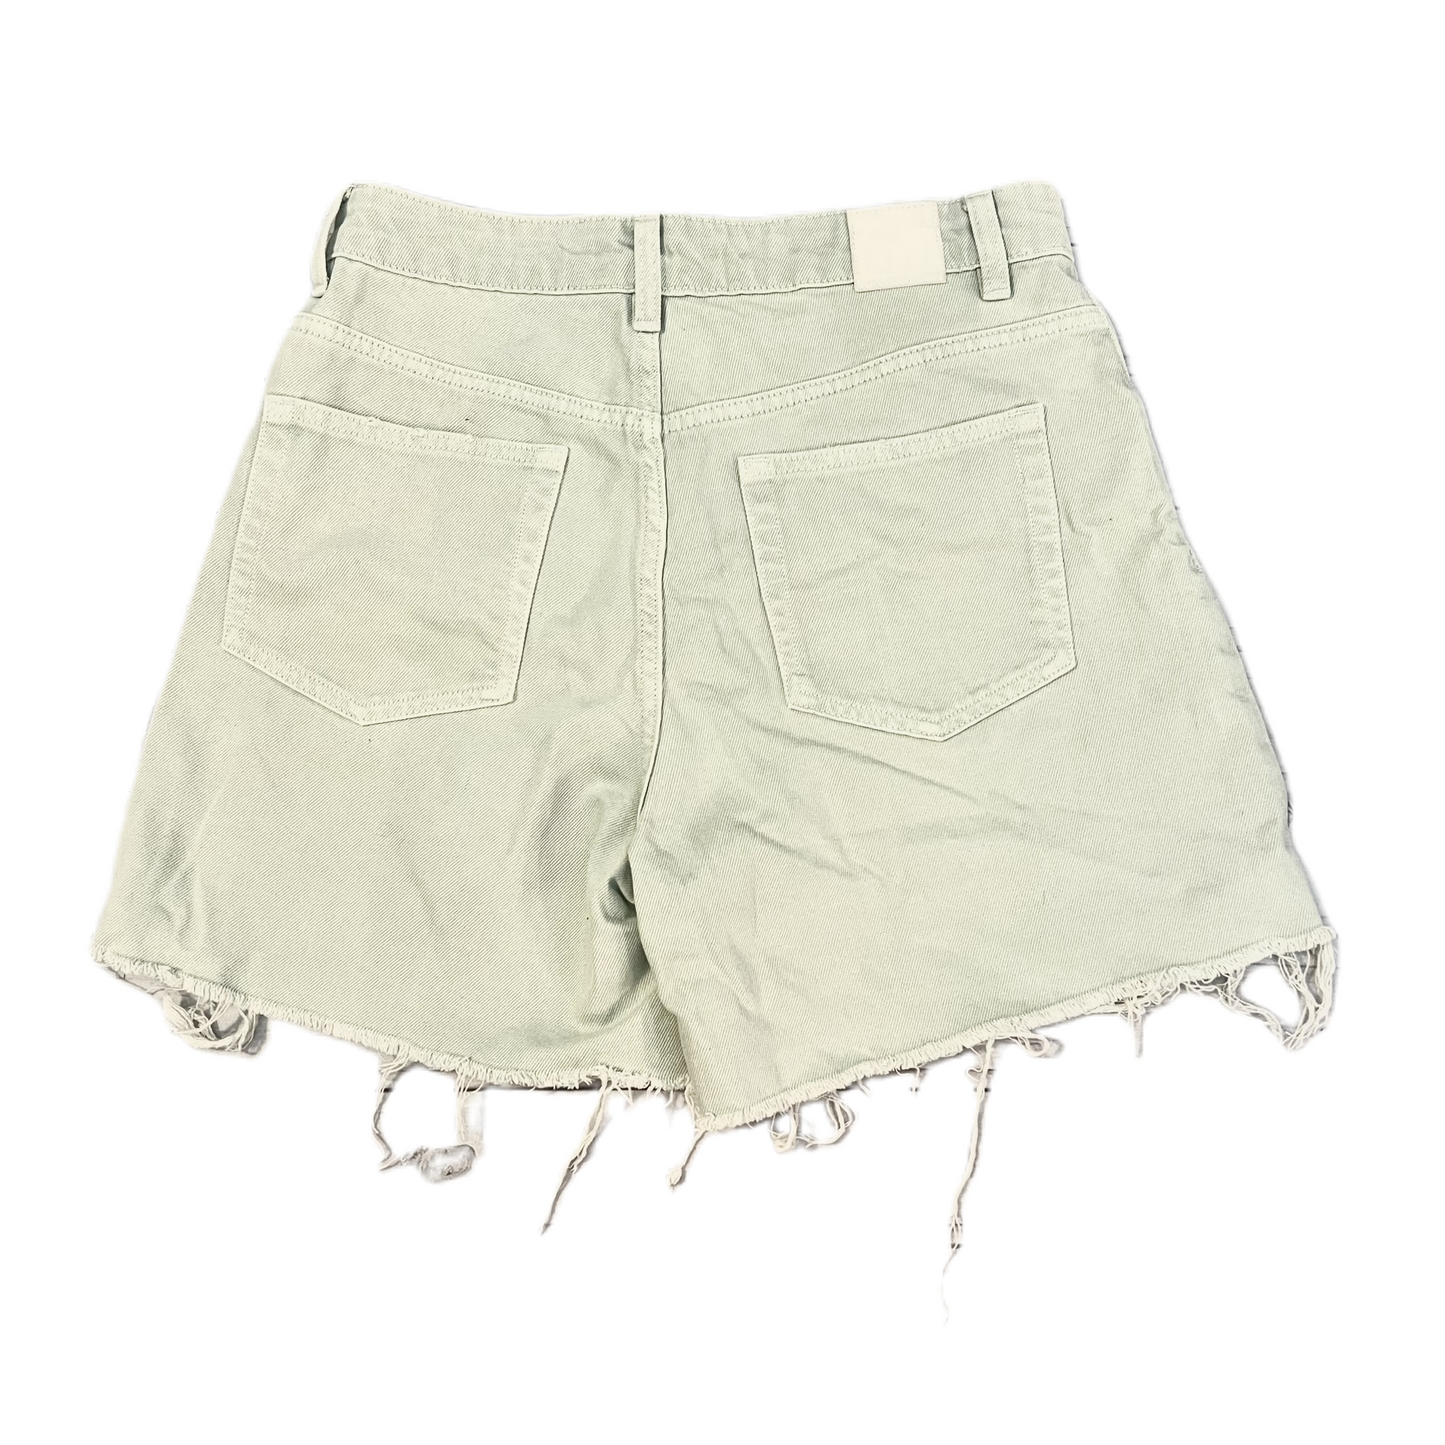 Shorts By Zara  Size: 4